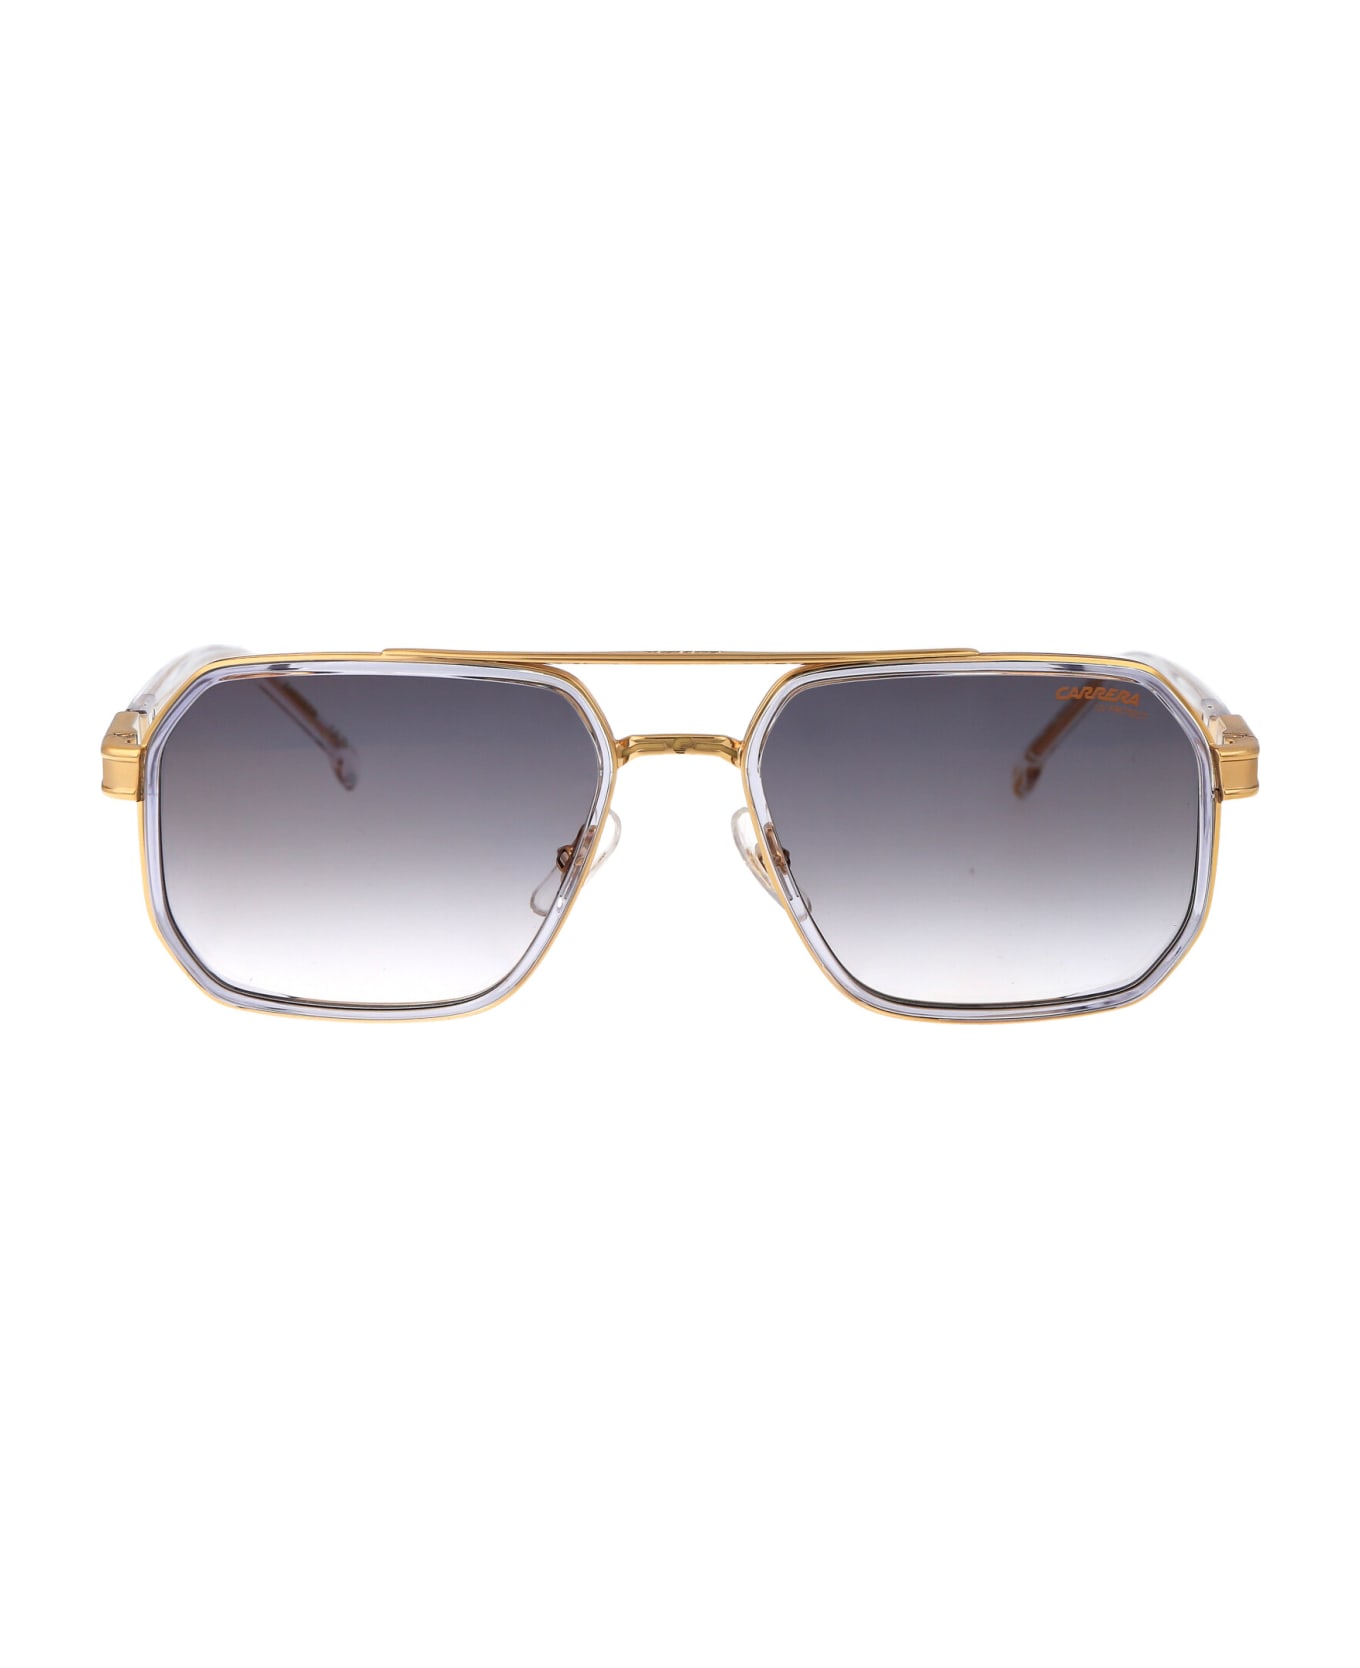 Carrera 1069/s Sunglasses - REJFQ CRYS GOLD